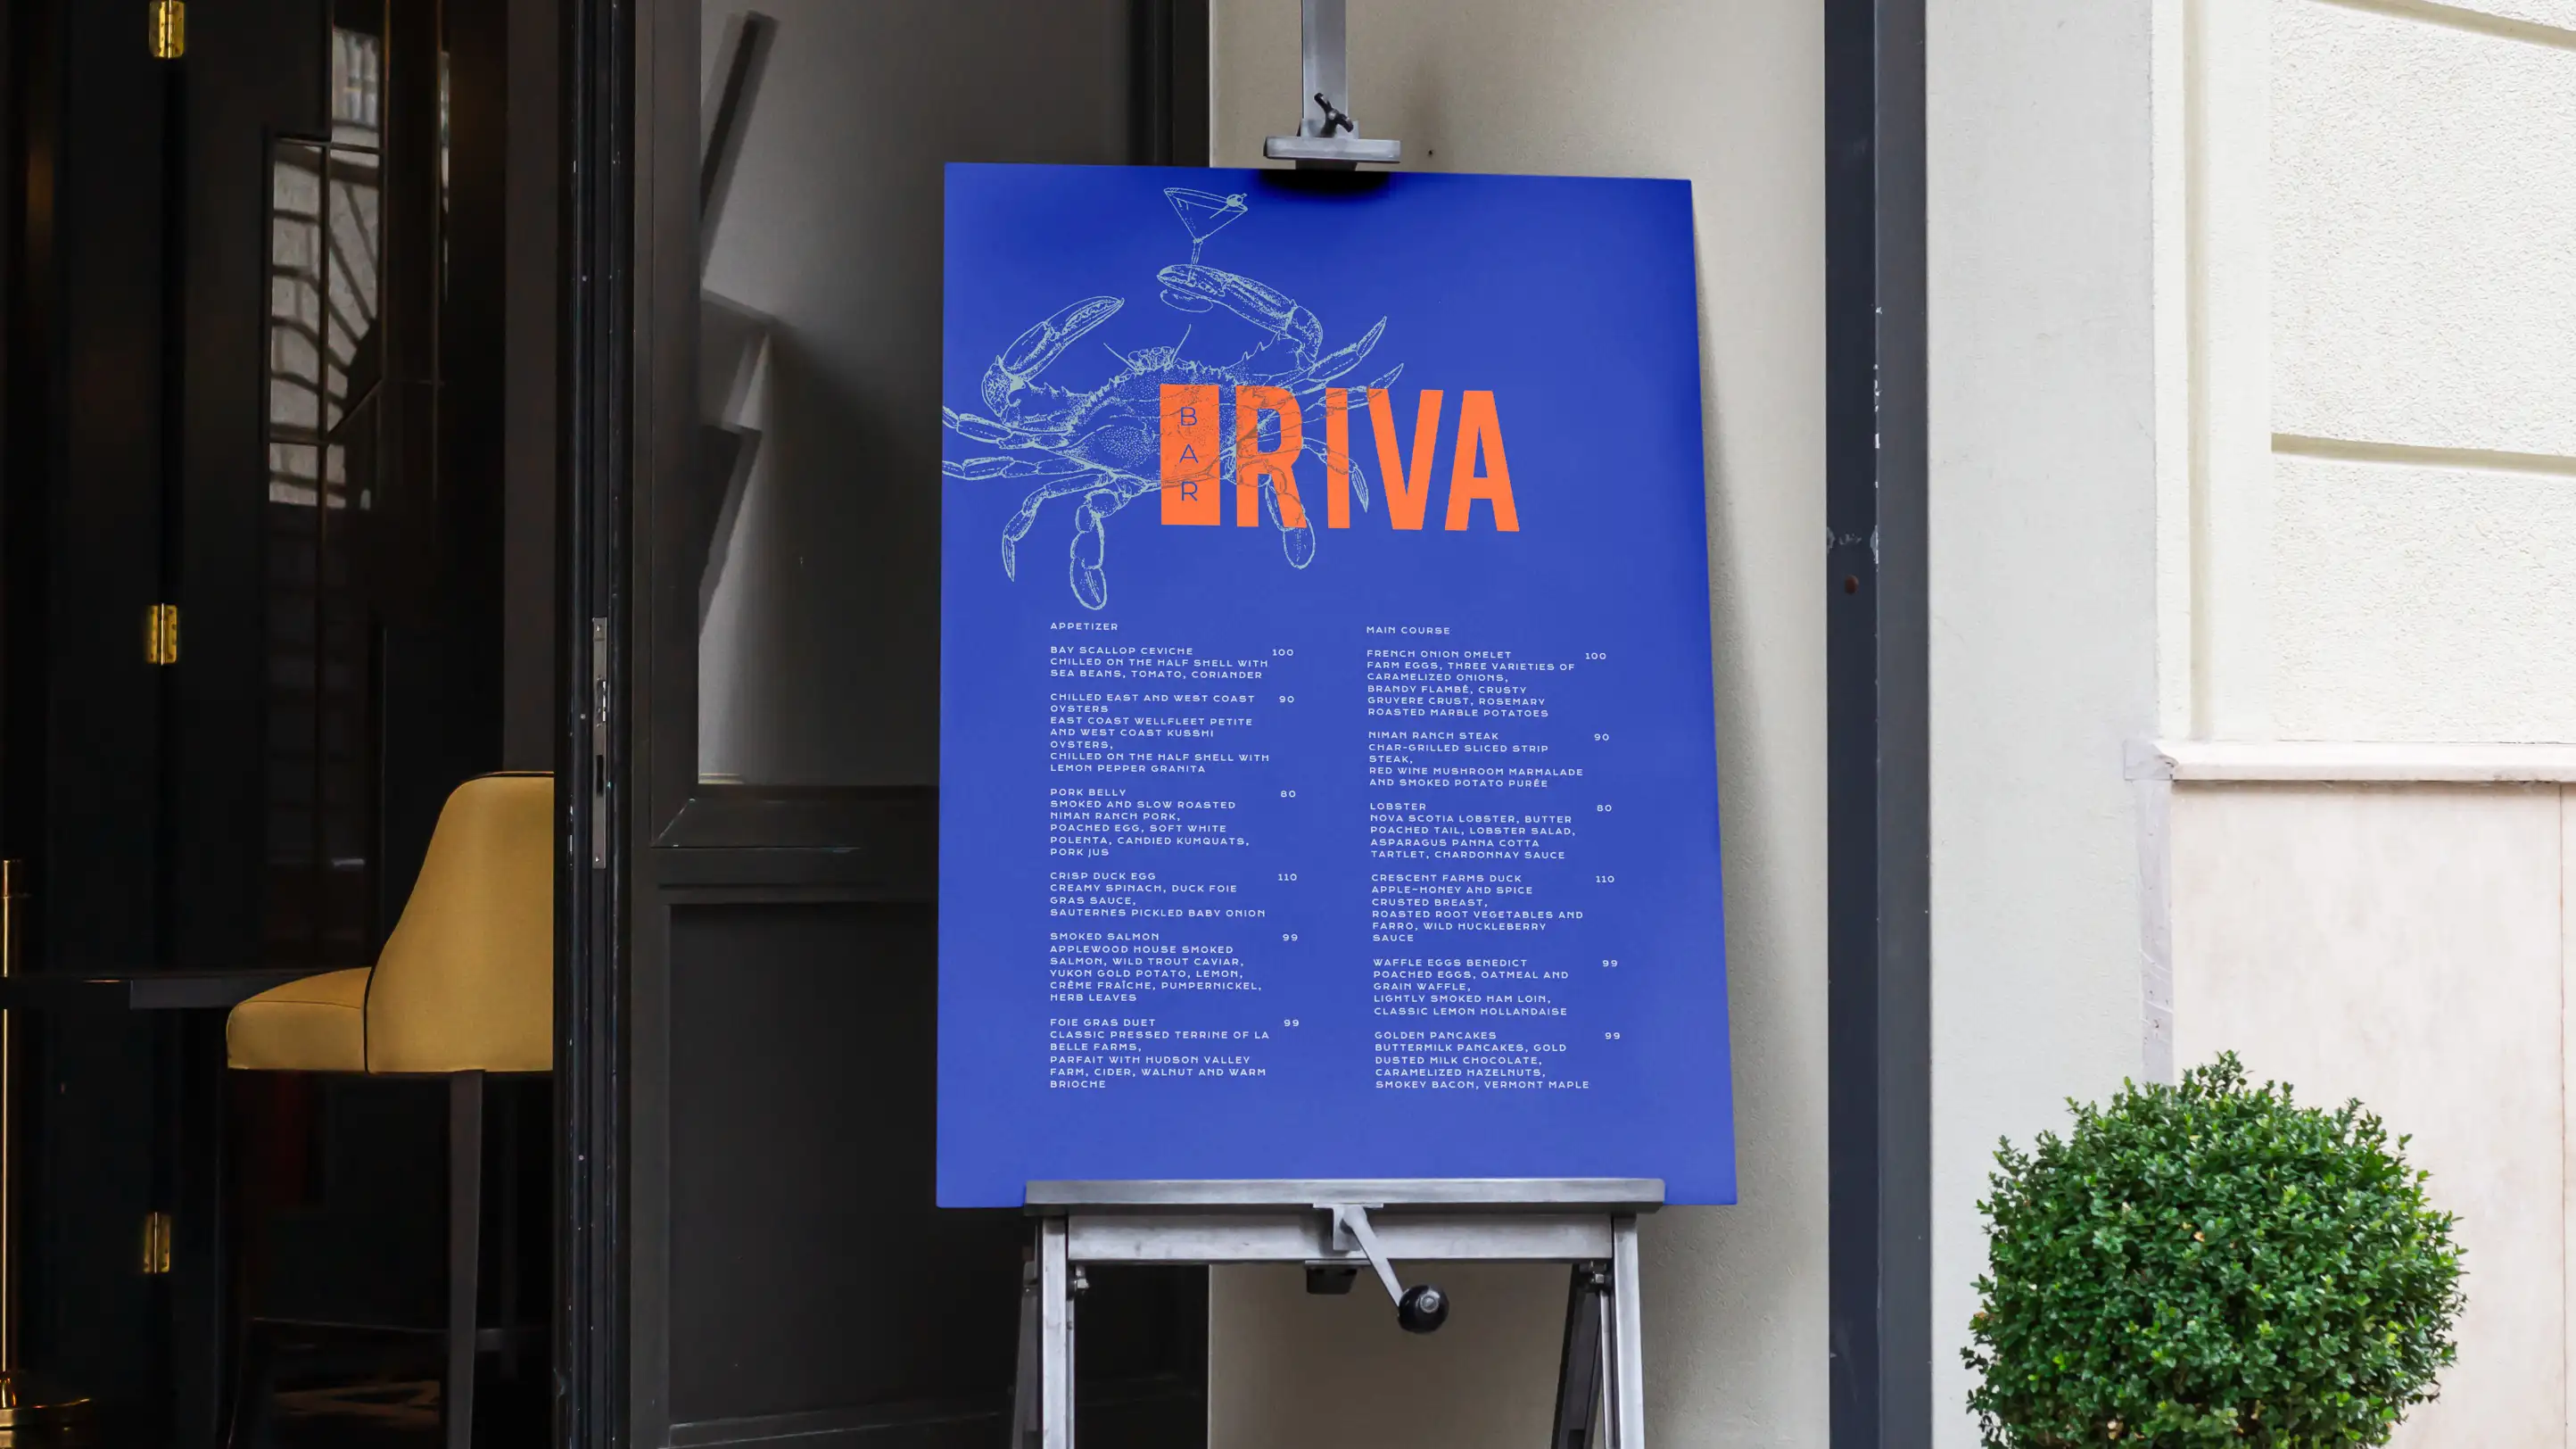 Bar Riva crab logo on blue menu board outside bar entrance.